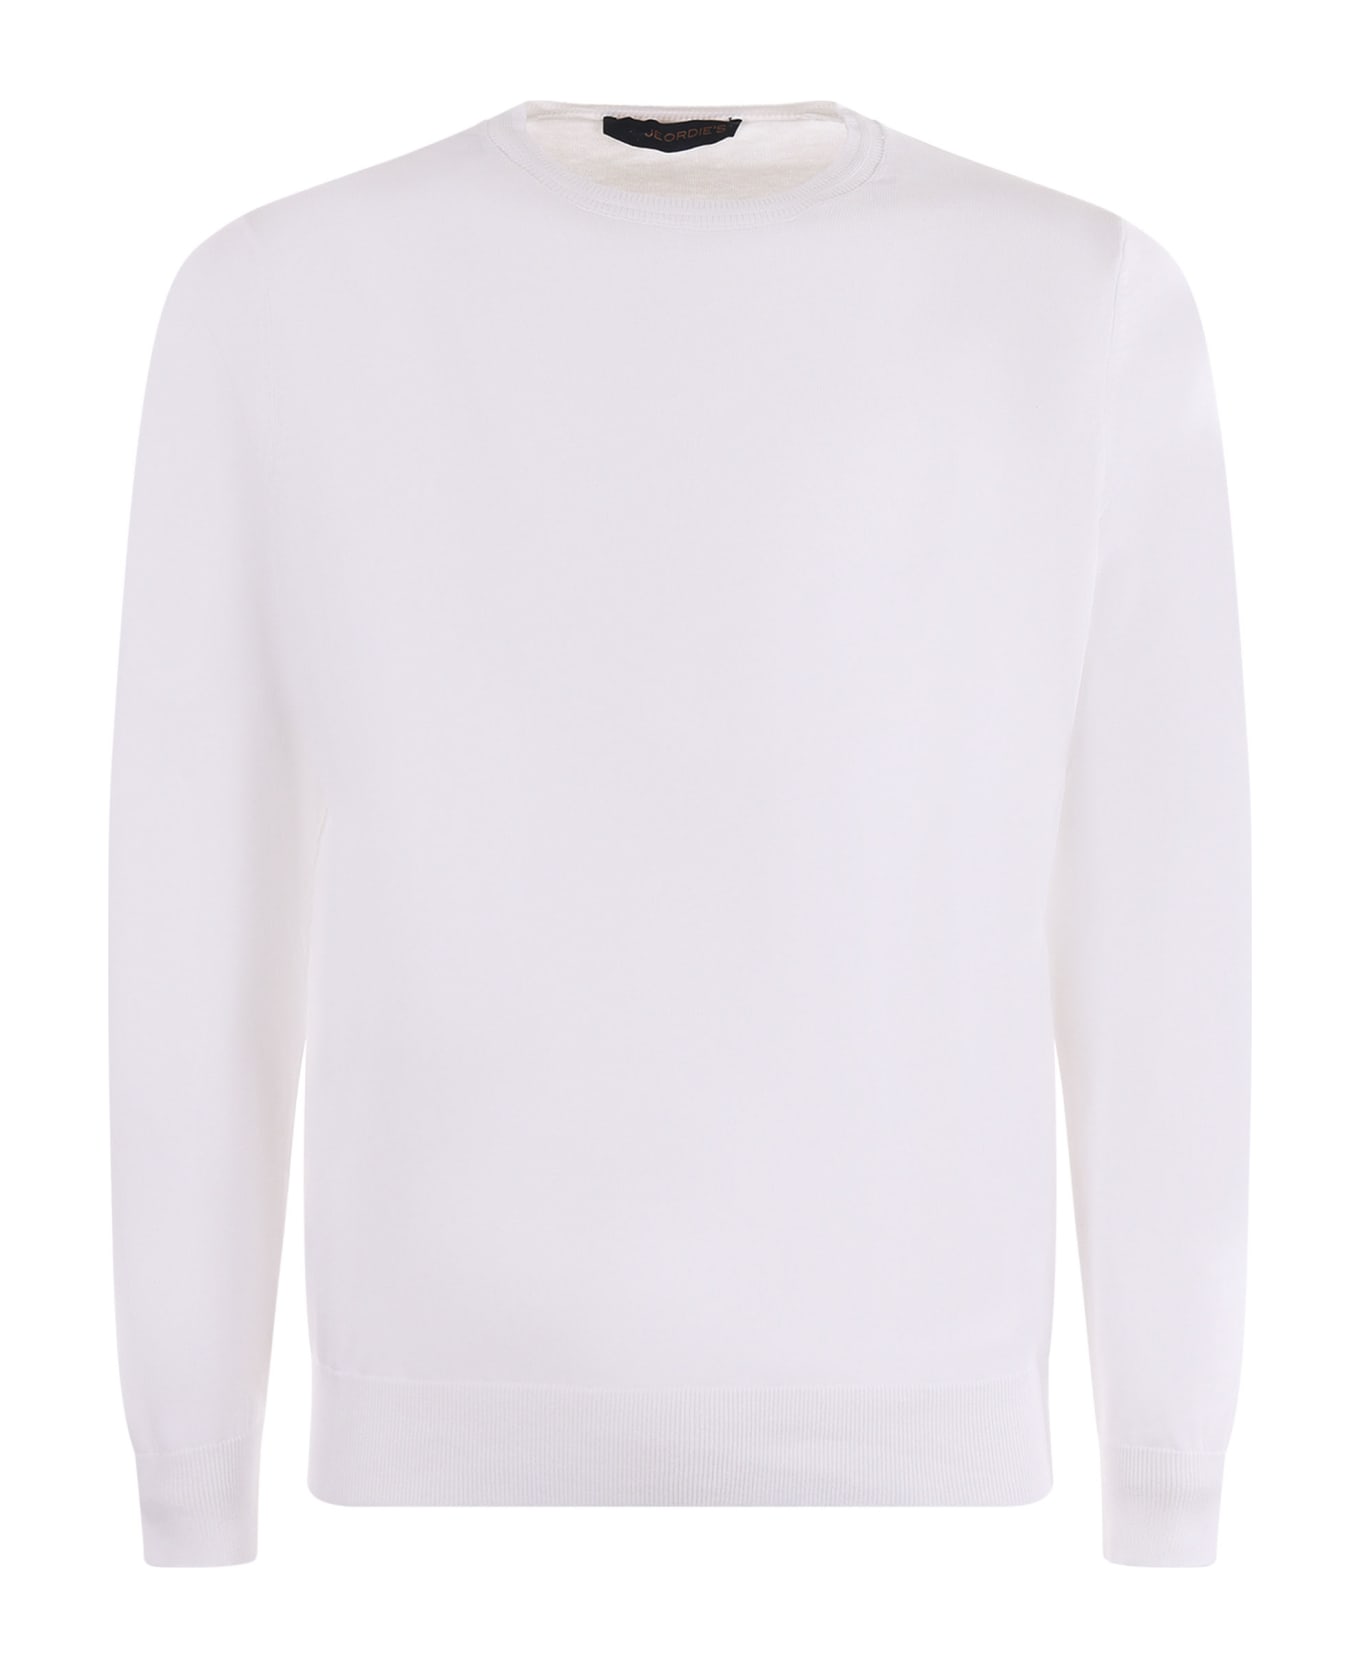 Jeordie's Sweater - Bianco ニットウェア